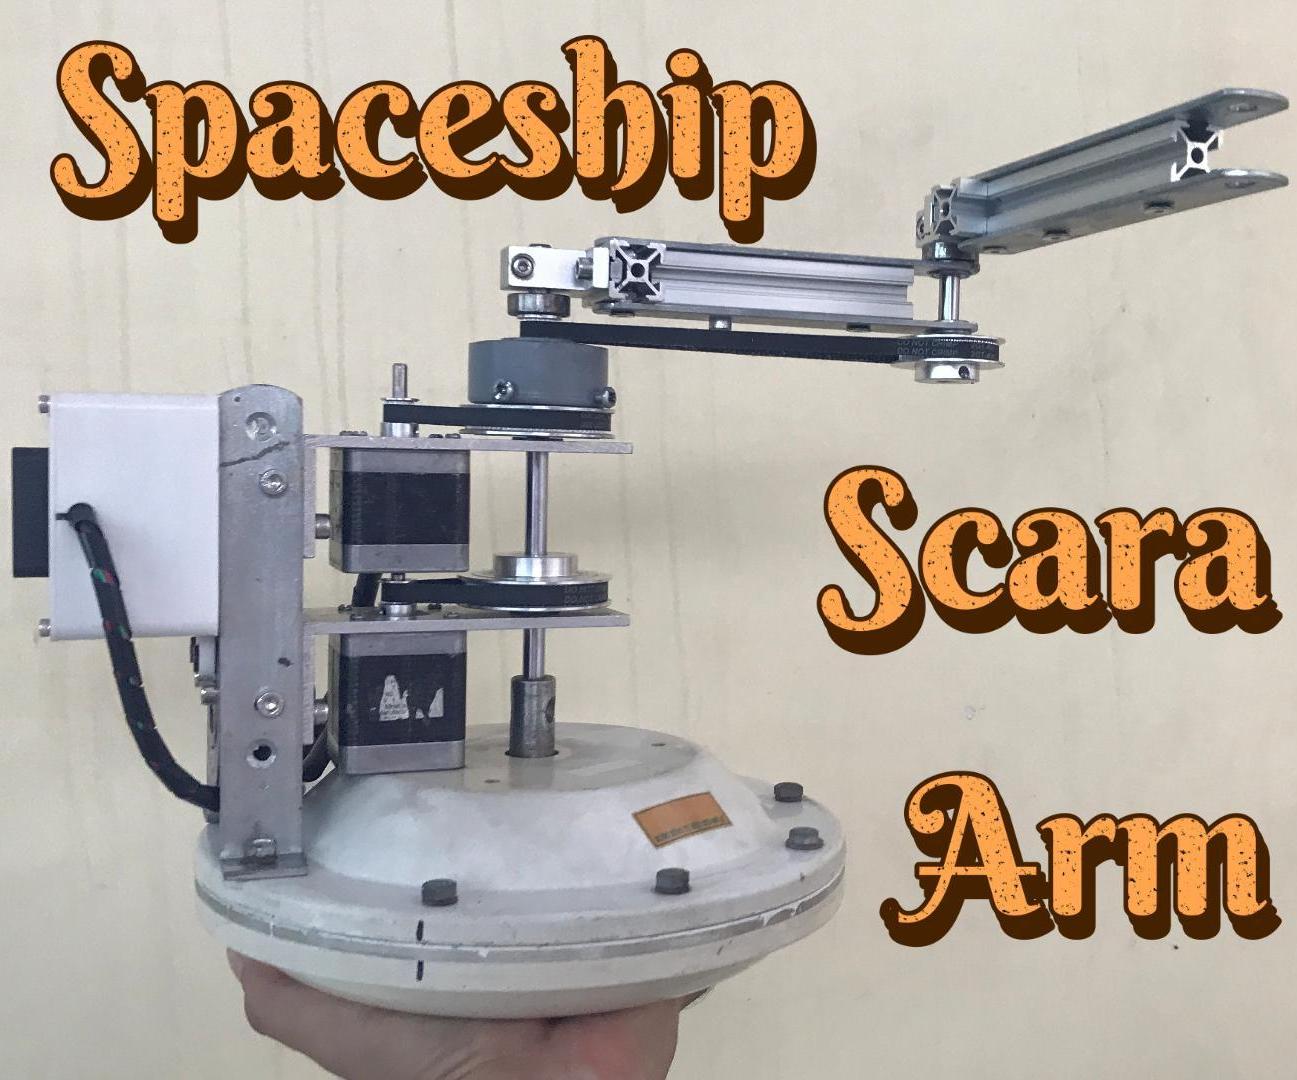 Spaceship Scara Arm